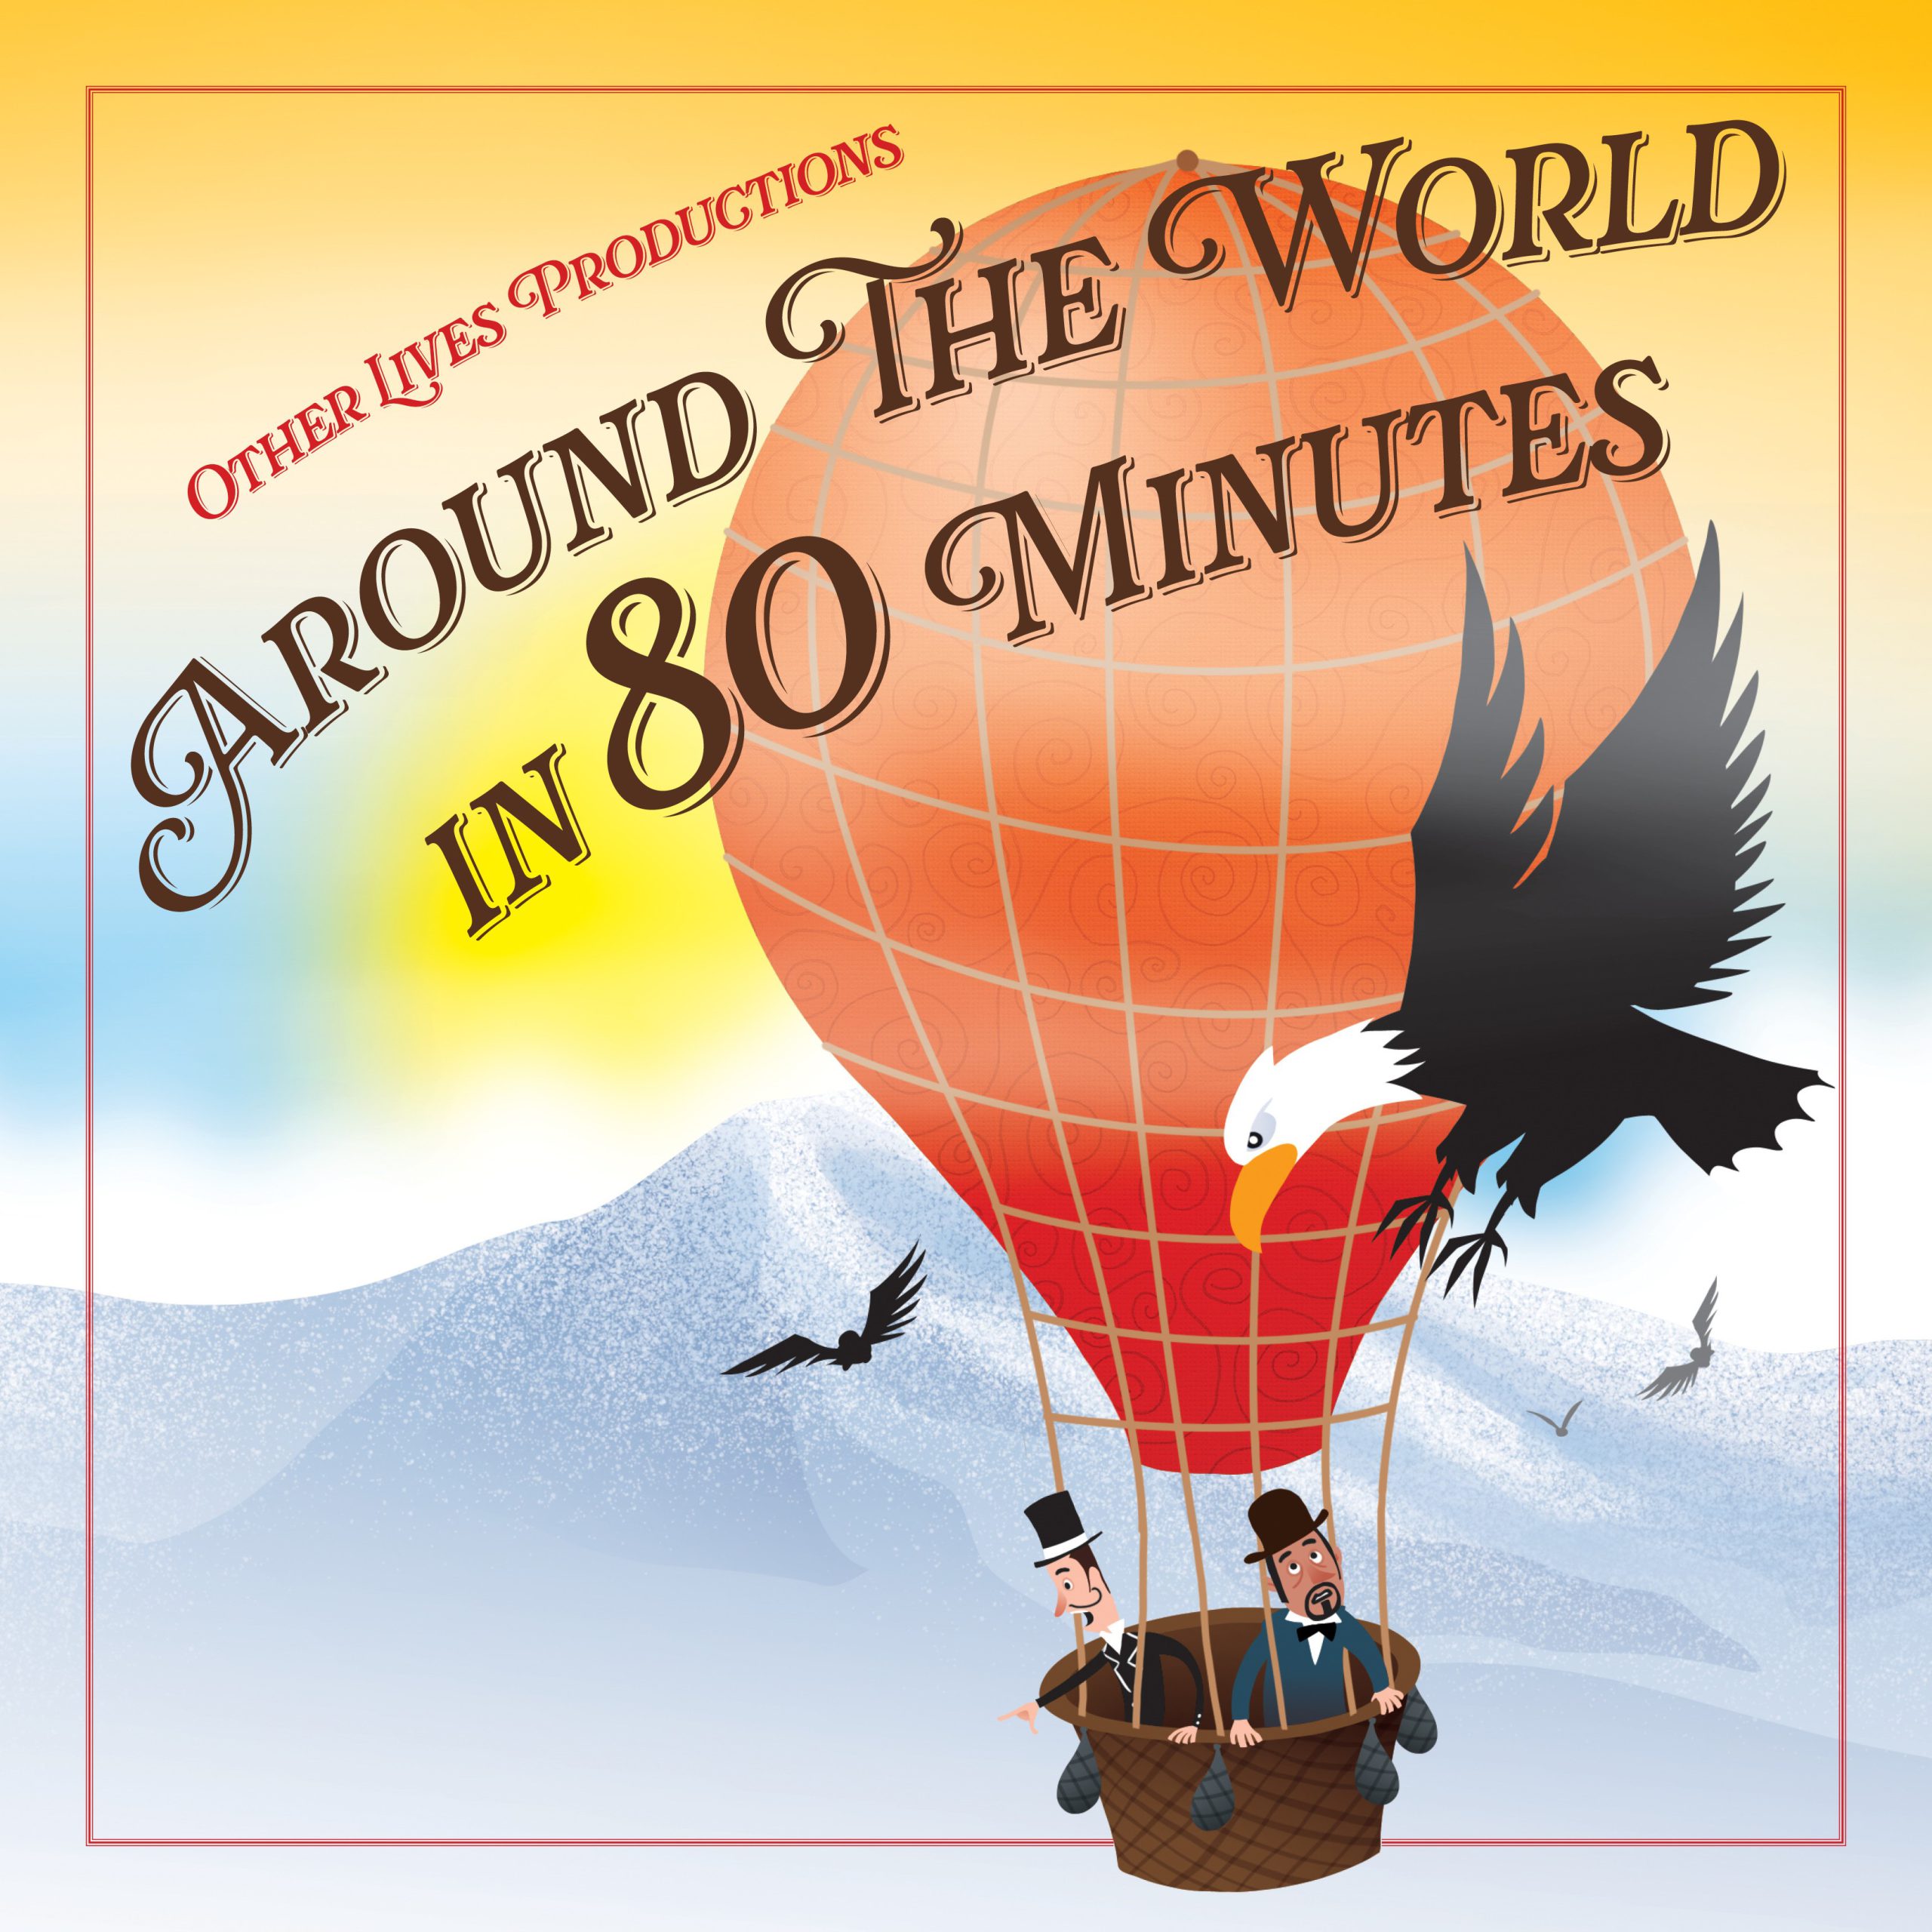 Around the world in 80 minutes